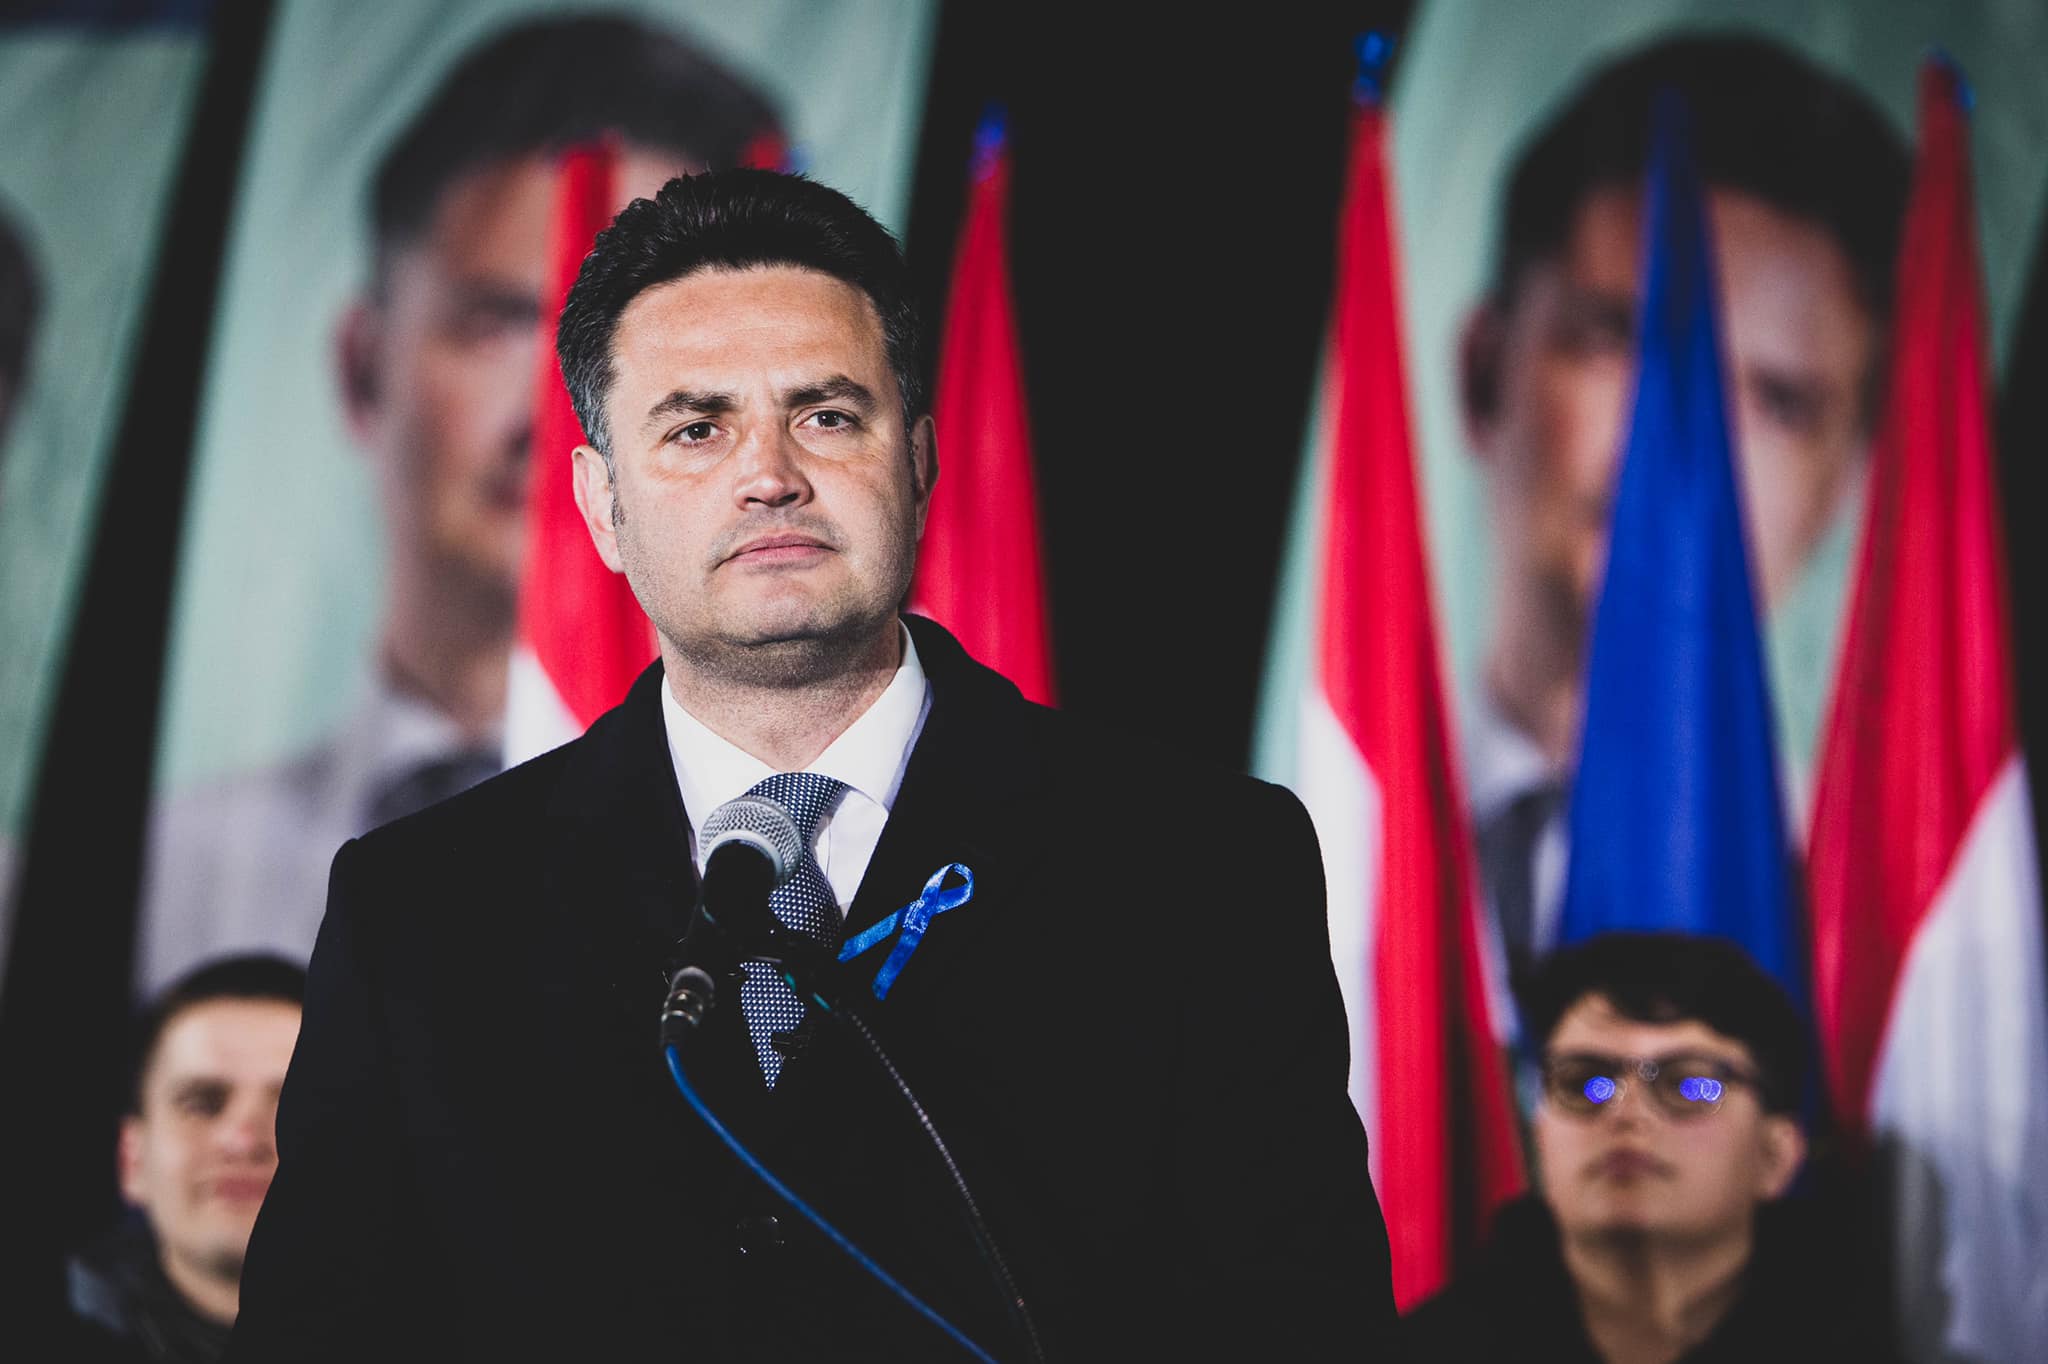 Péter Márki-Zay bleibt Bürgermeister, statt seinen Sitz im Parlament einzunehmen